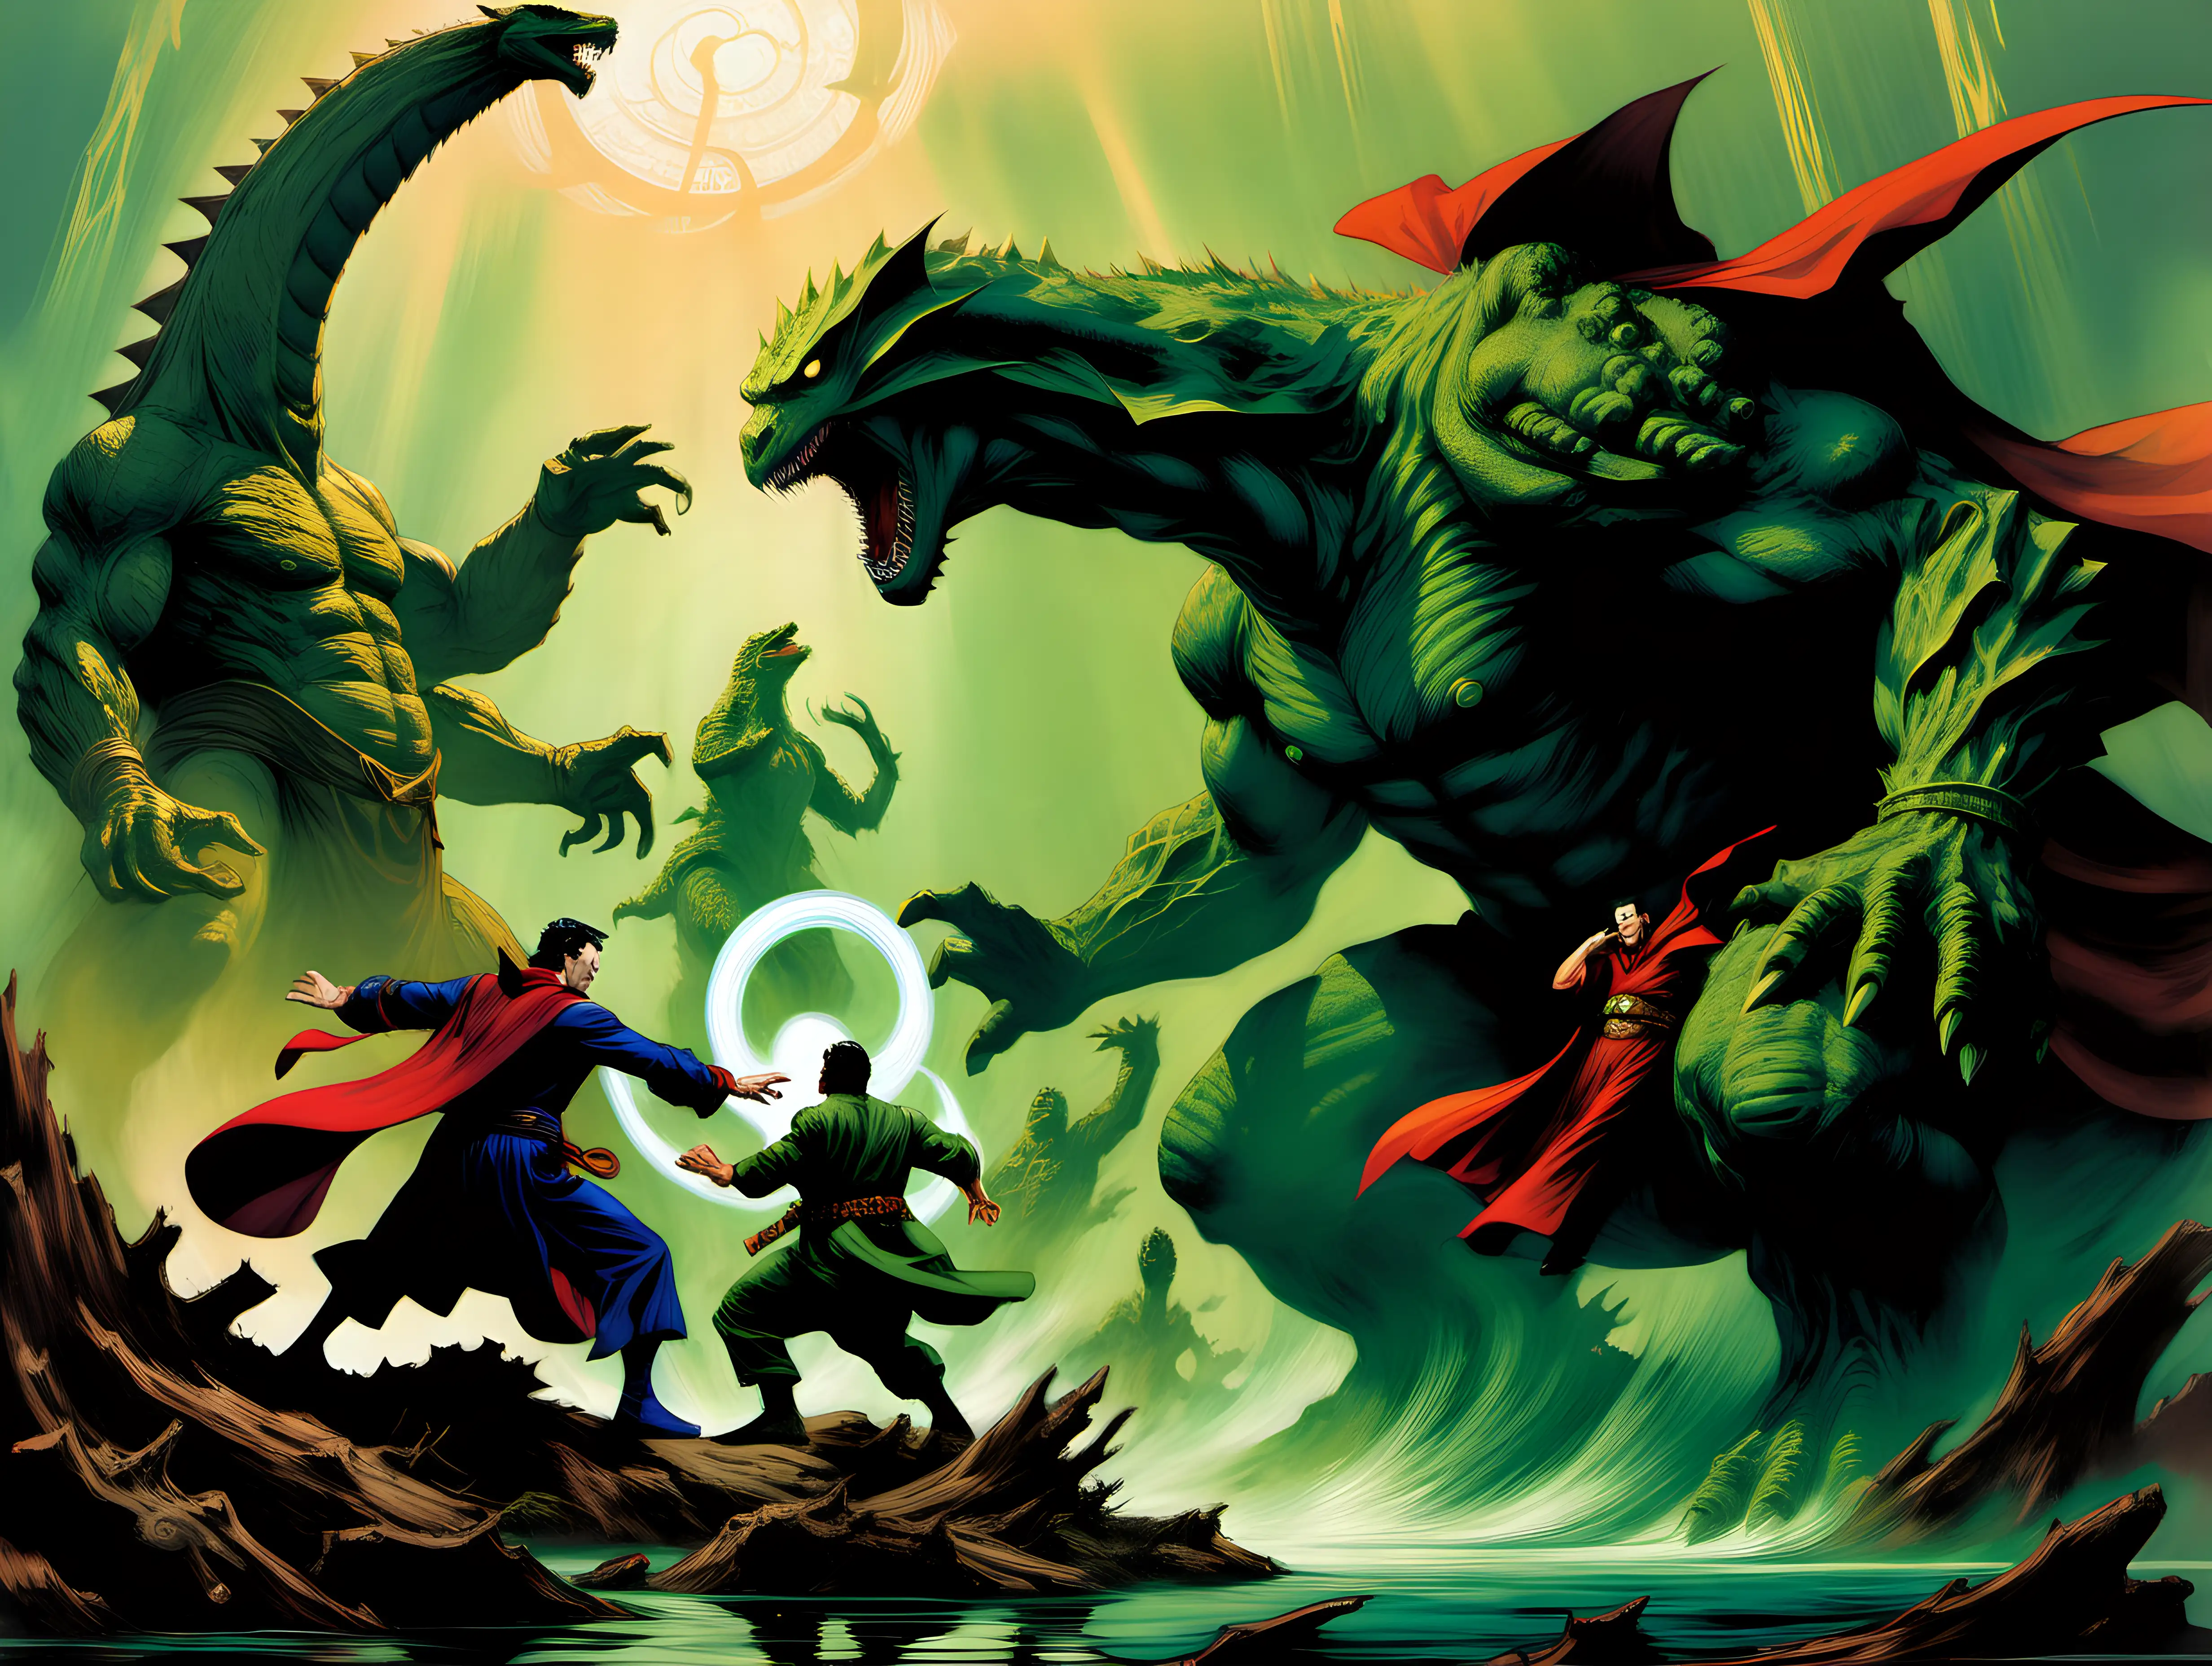 Doctor Strange fighting Godzilla in ancient swamp Frank Frazetta style